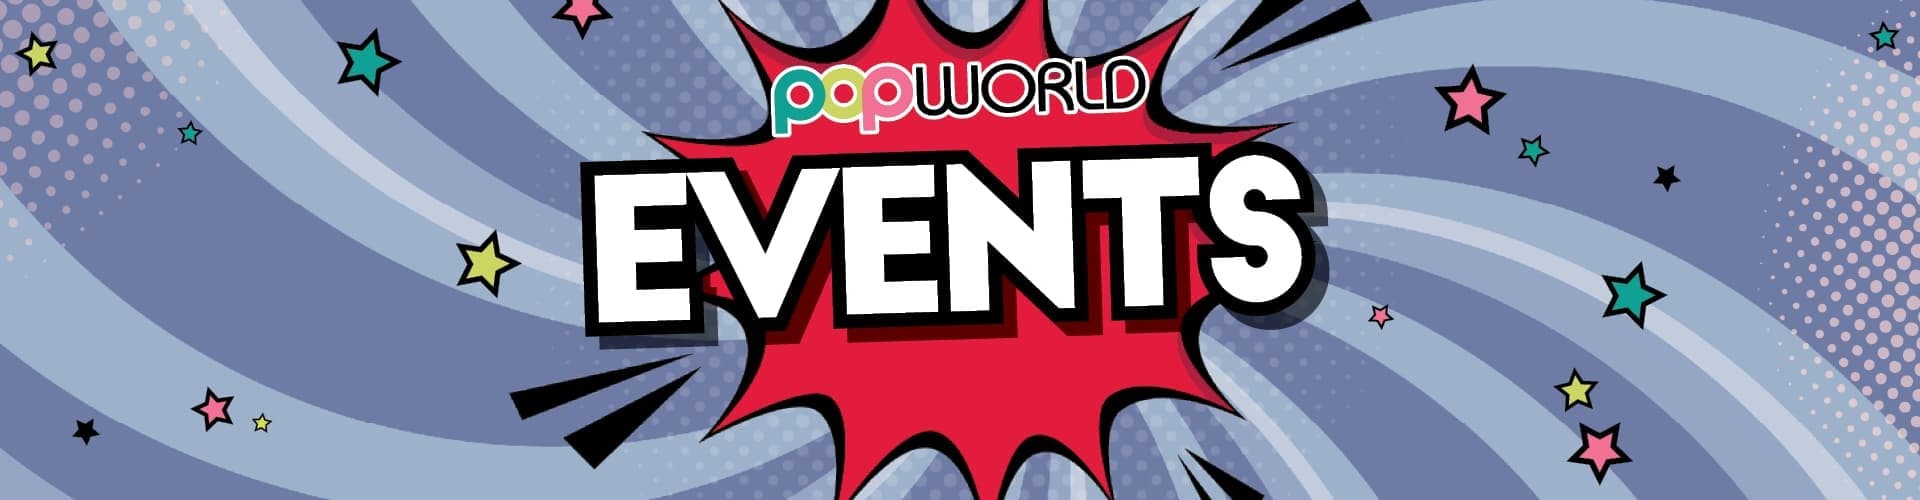 Events at Popworld Glasgow